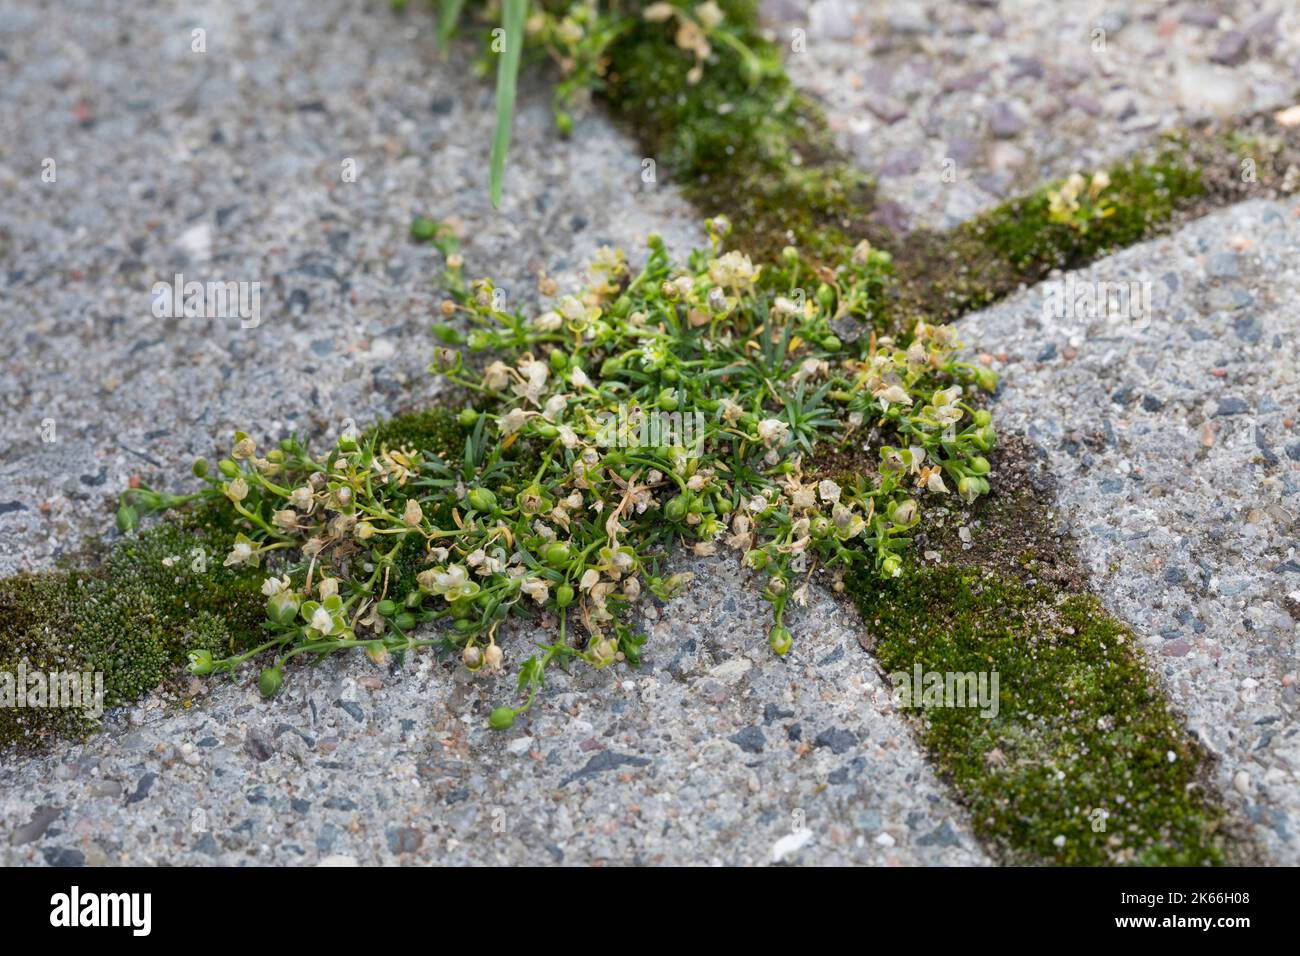 bird's-eye pearlwort, procumbent pearlwort (Sagina procumbens), growing on a pavement, Germany Stock Photo